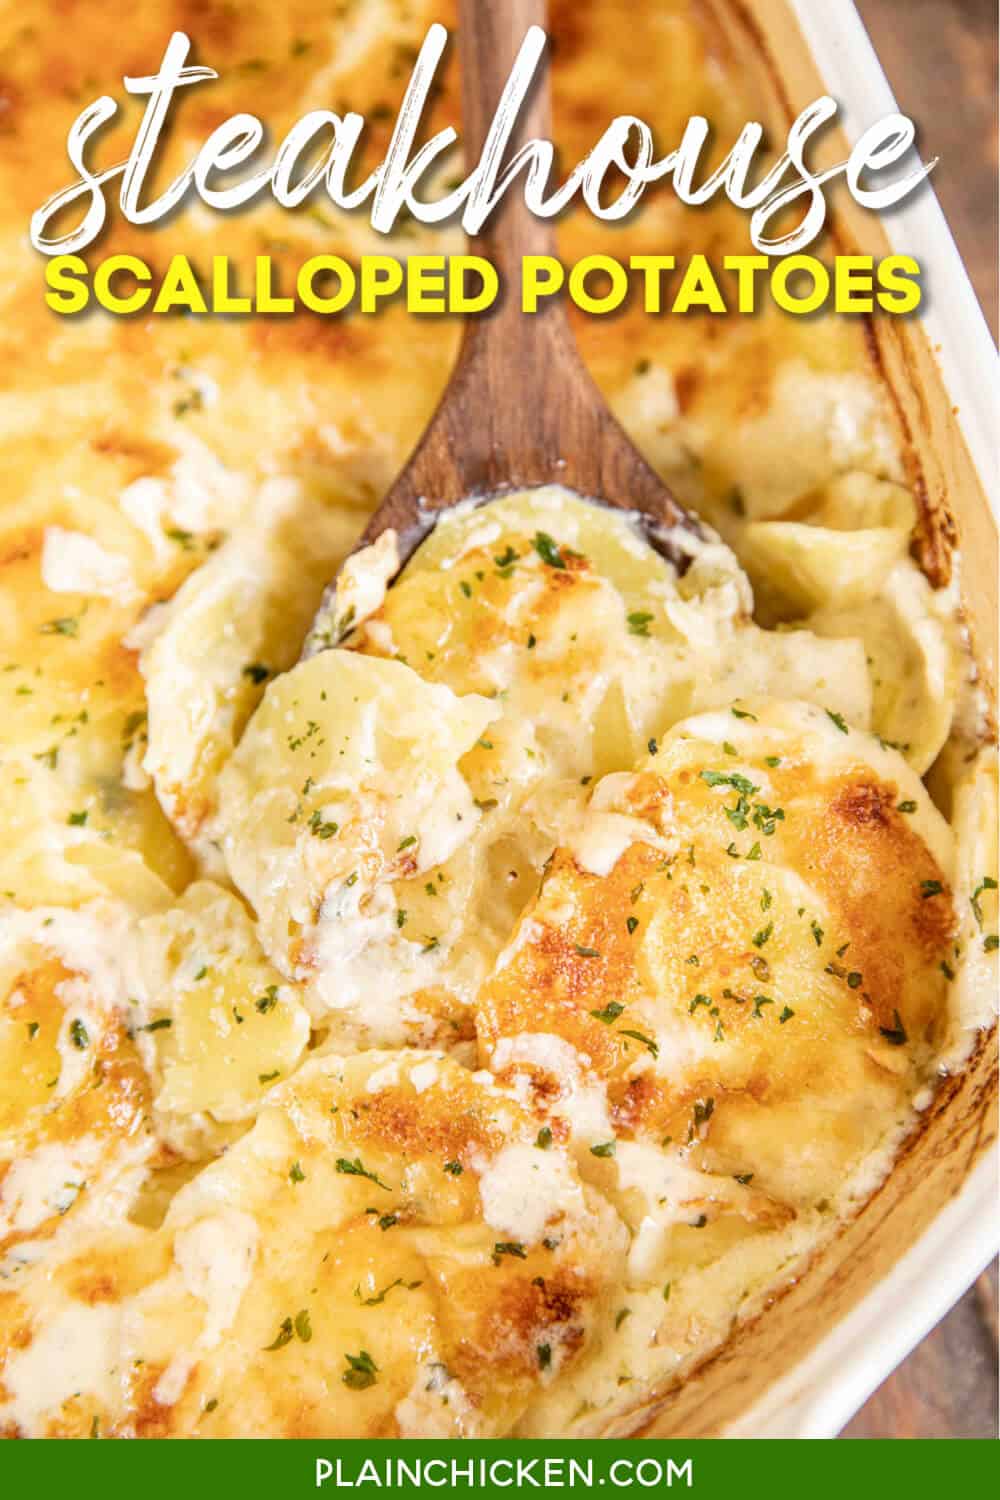 Best Air Fryer Scalloped Potatoes - Easy Recipe